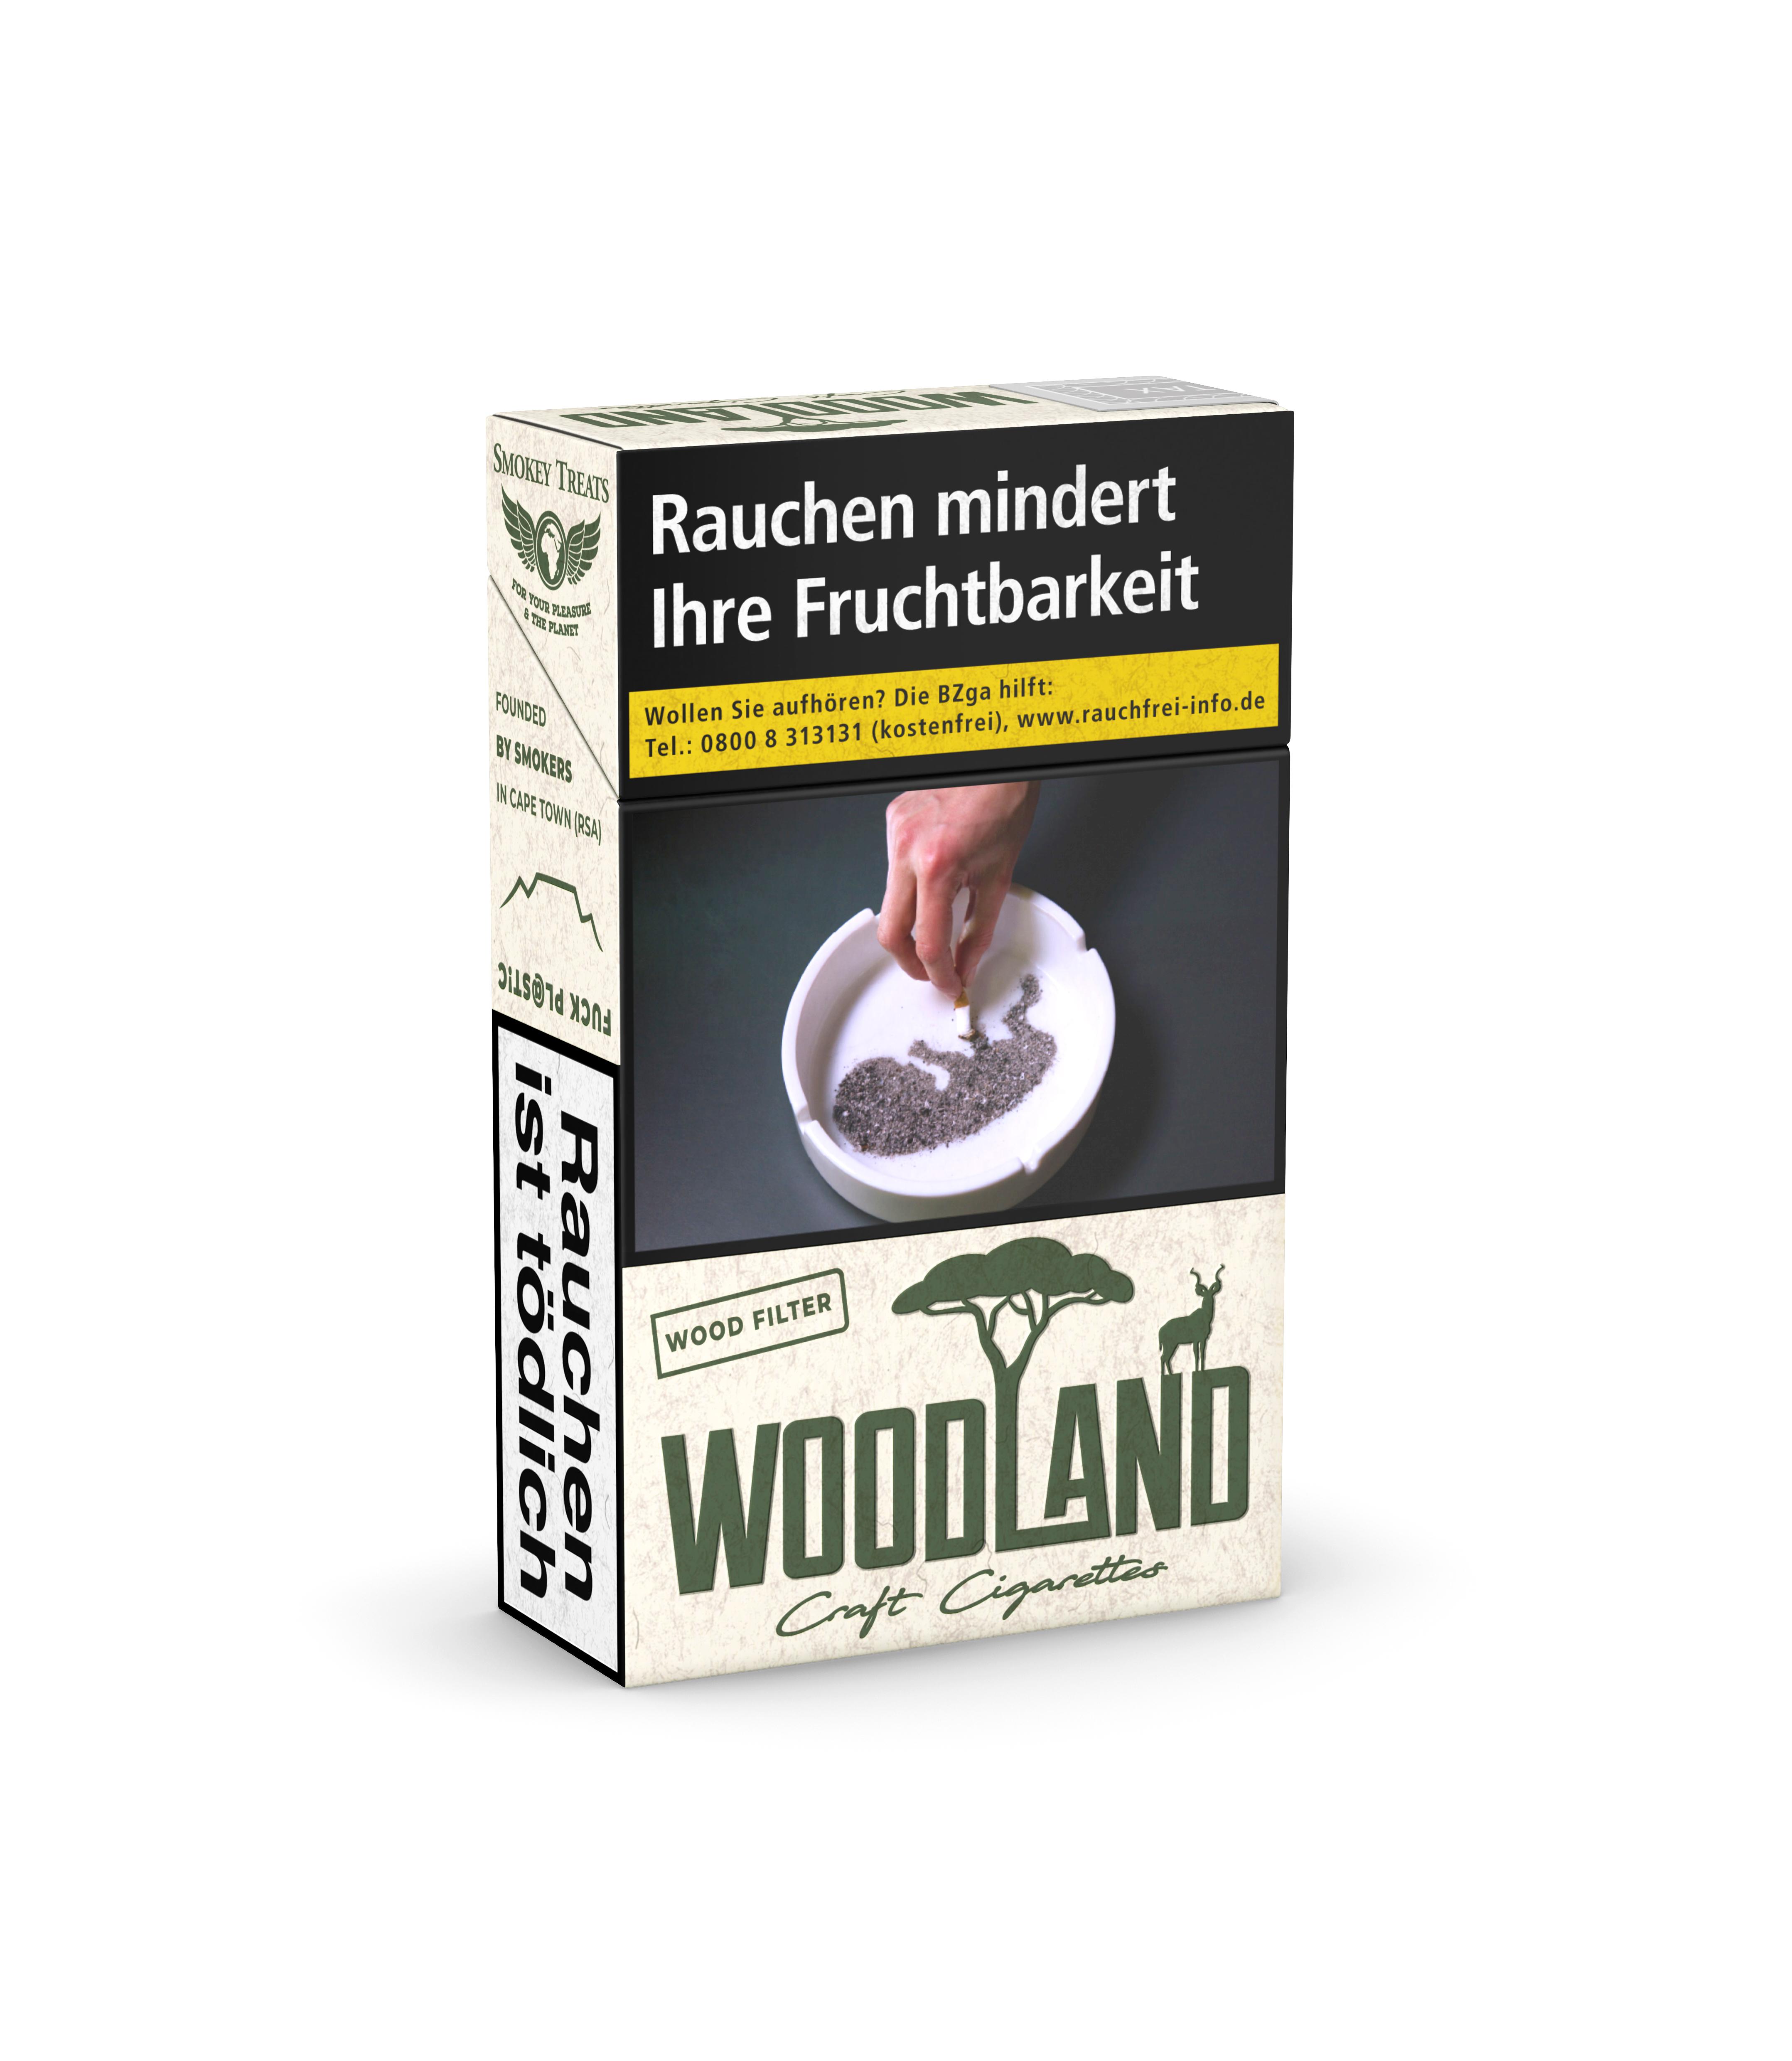 Woodland Craft Zigaretten 1 Packung